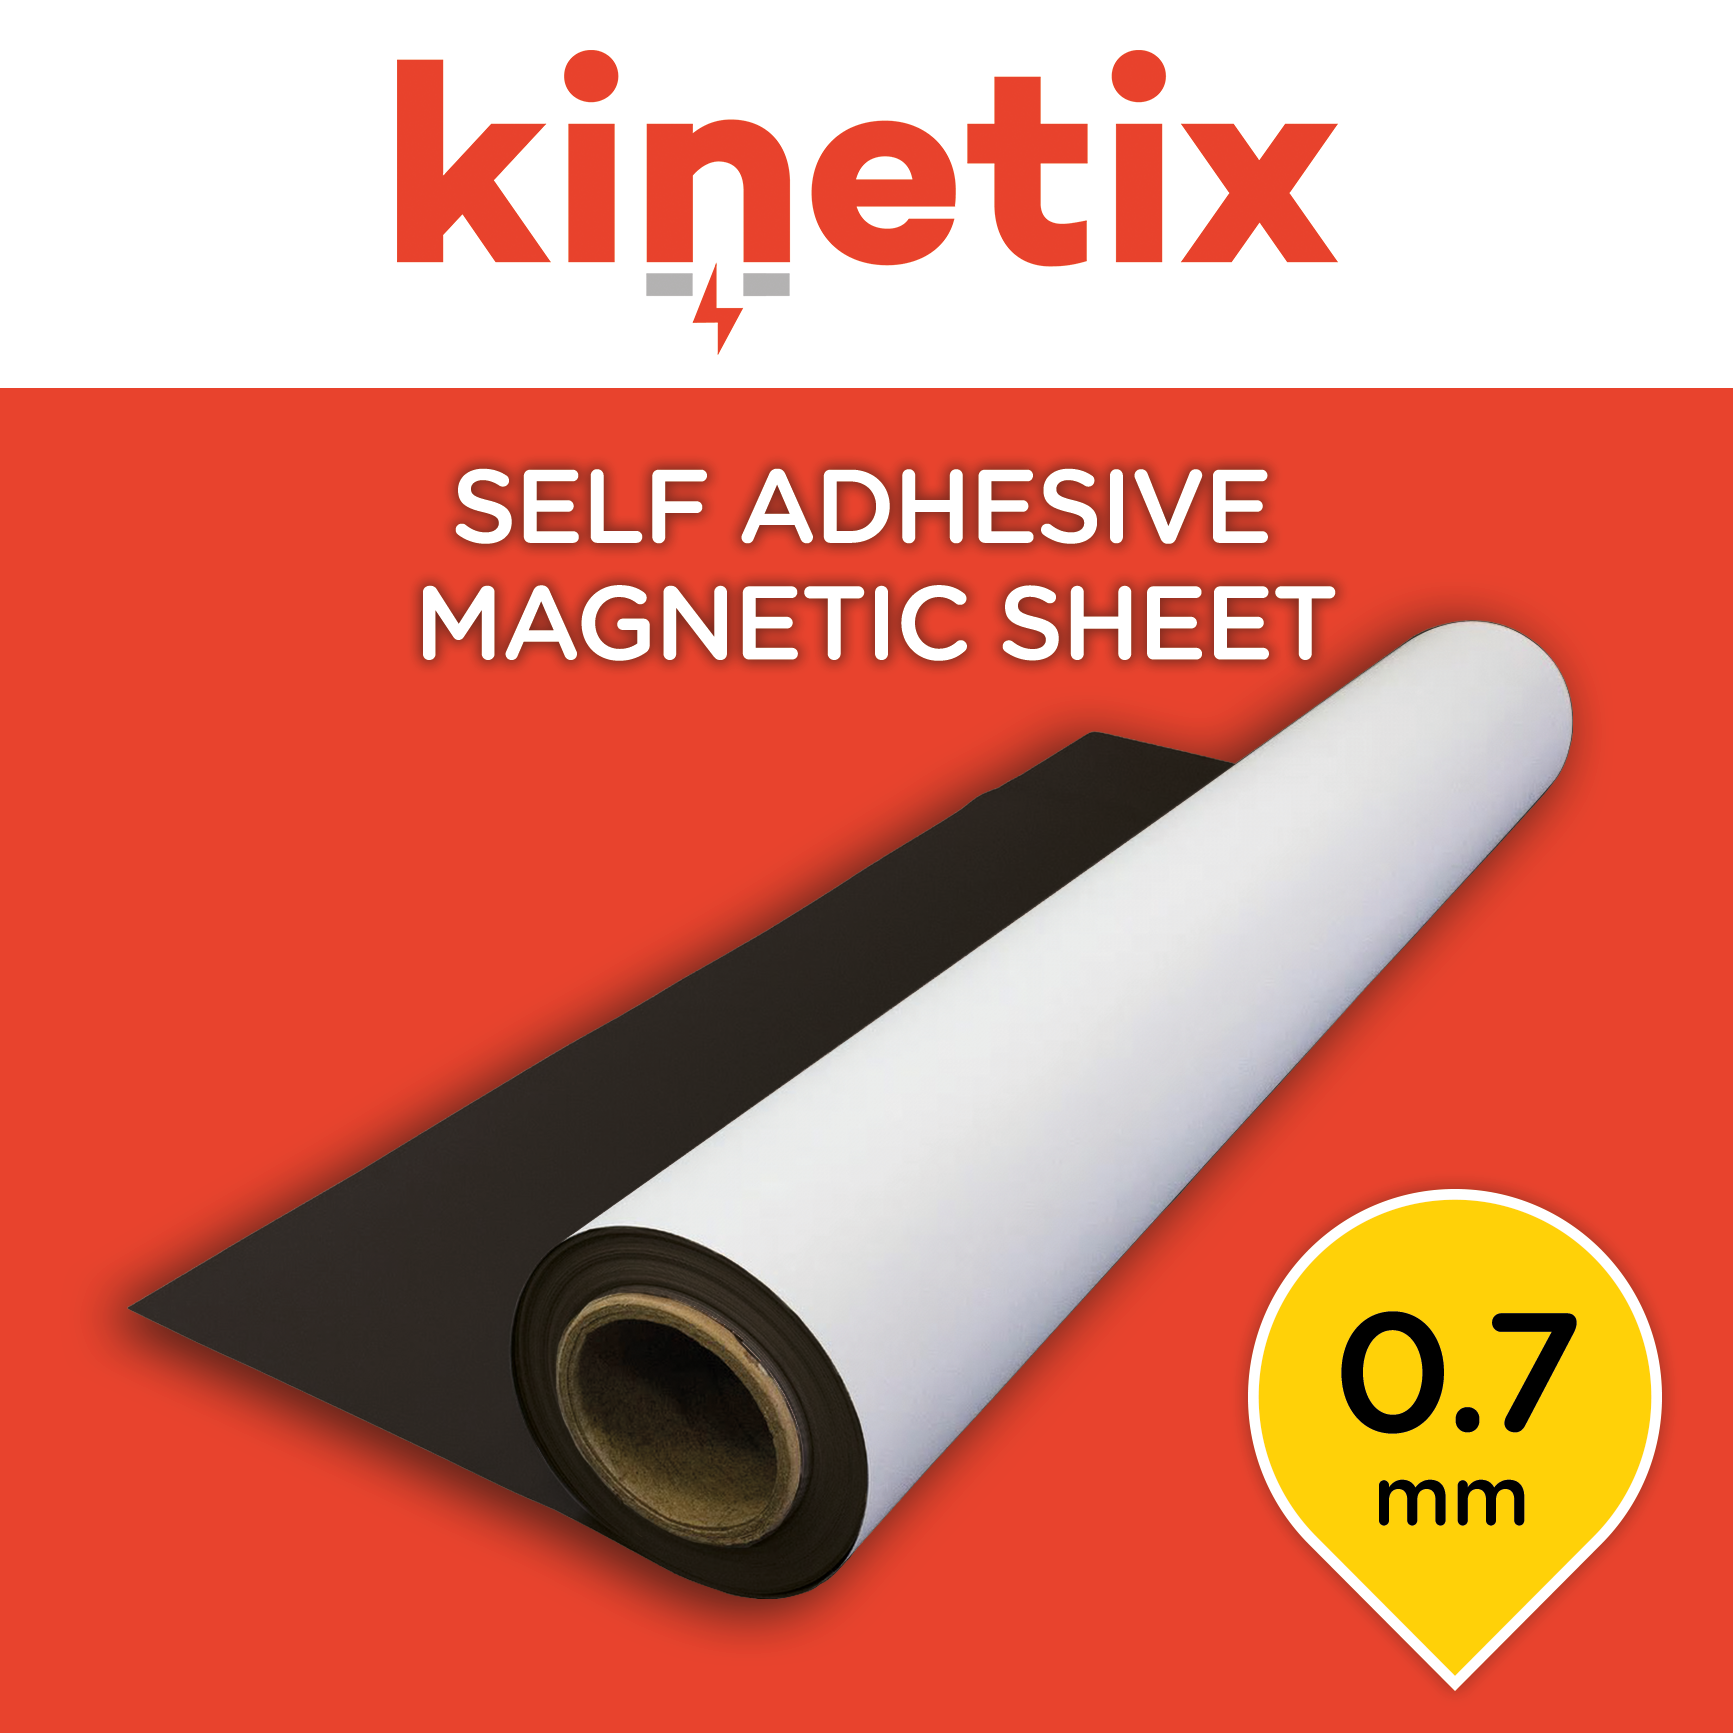 Kinetix SM700 - Self Adhesive Magnetic Sheet 0.7mm - Innotech